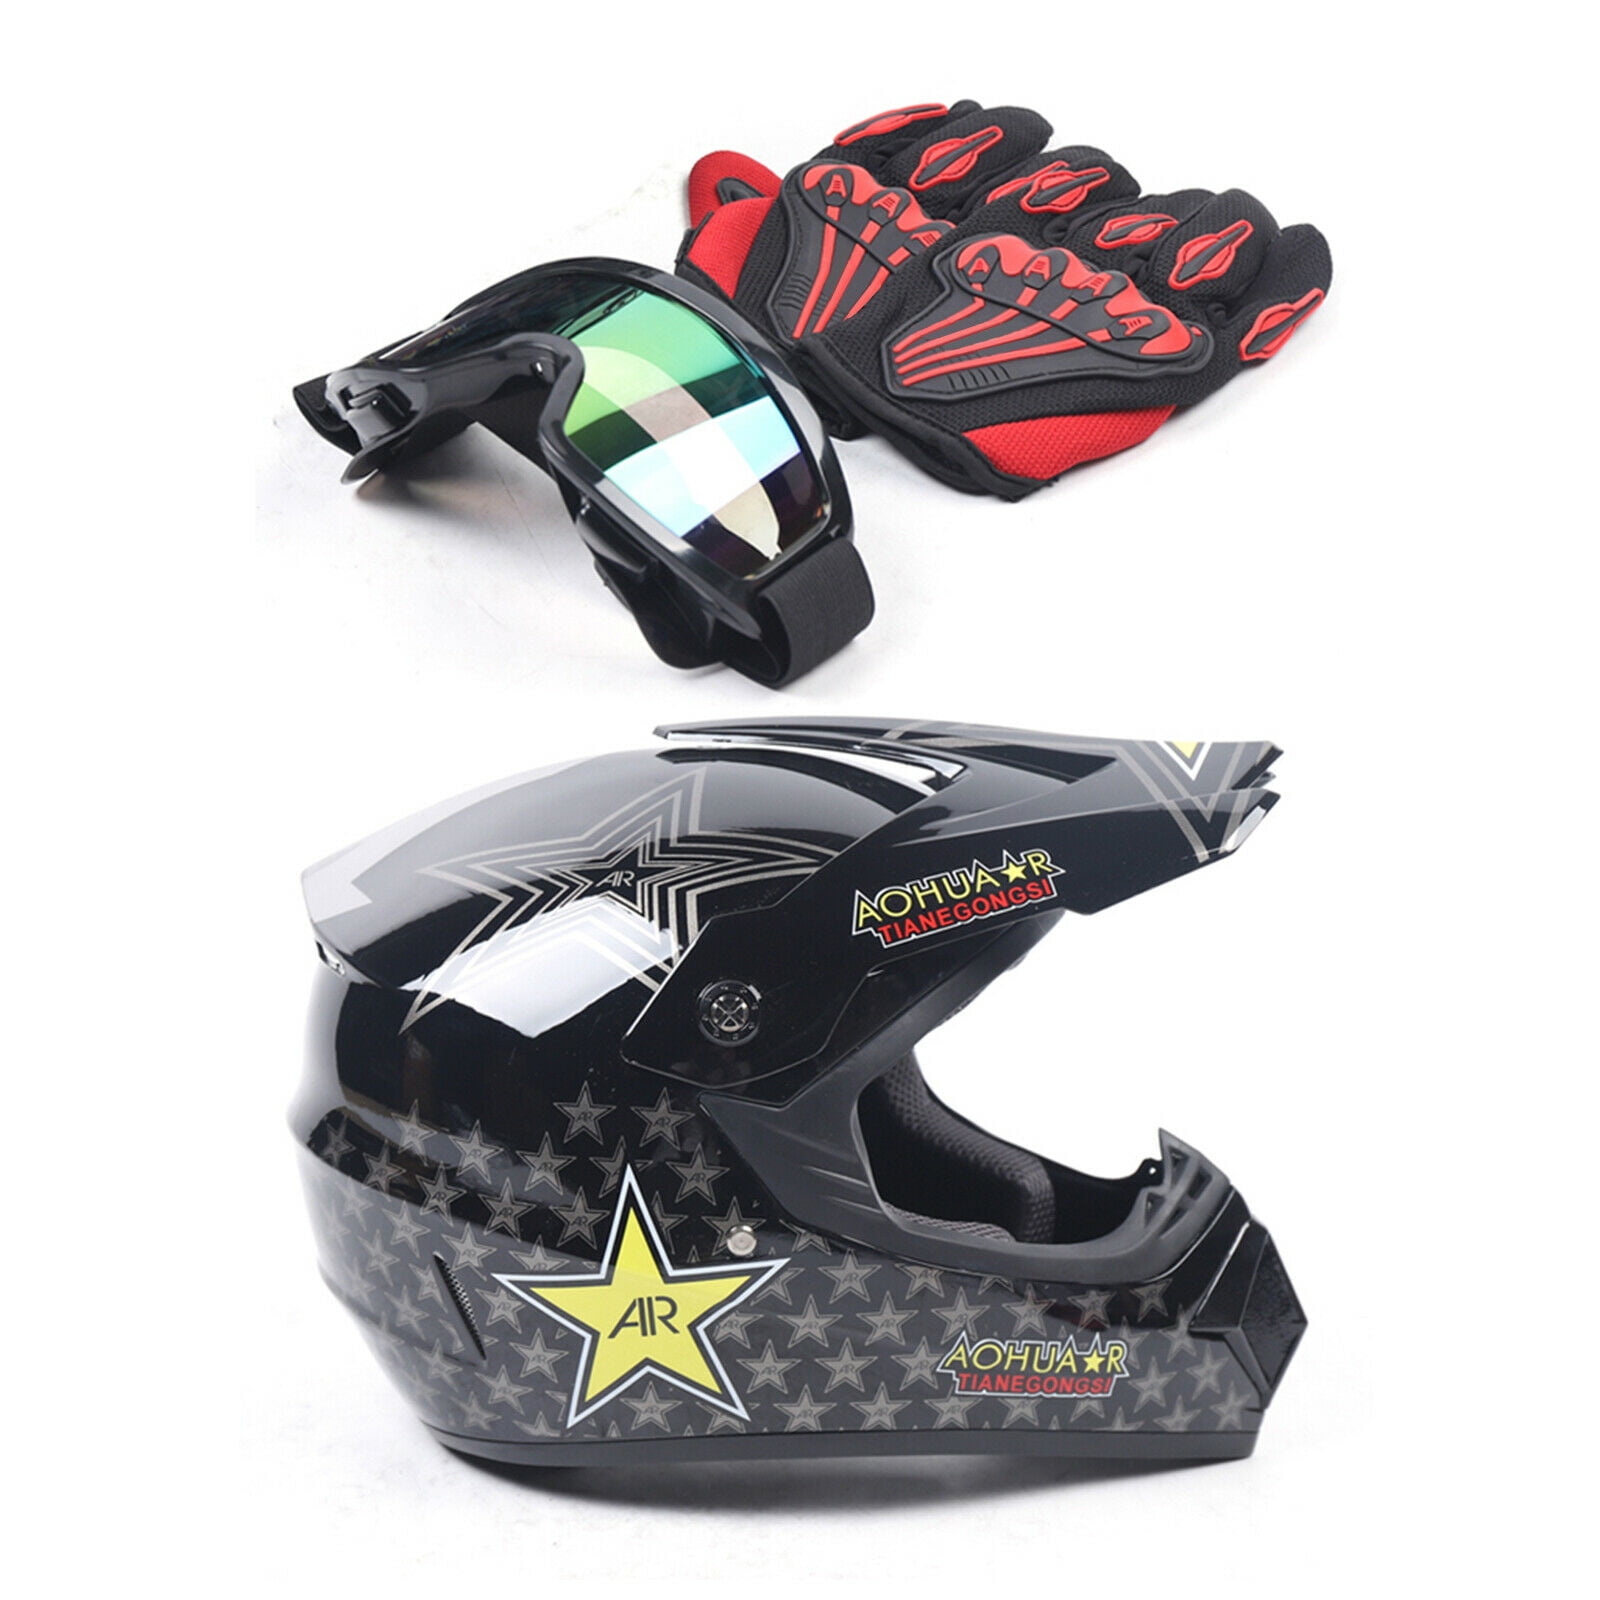 S, M, L, XL RAON Adult Motocross Helmet MX Motorcycle Helmet ATV Scooter ATV Helmet D.O.T Certified Multicolor with Goggles Gloves Mask